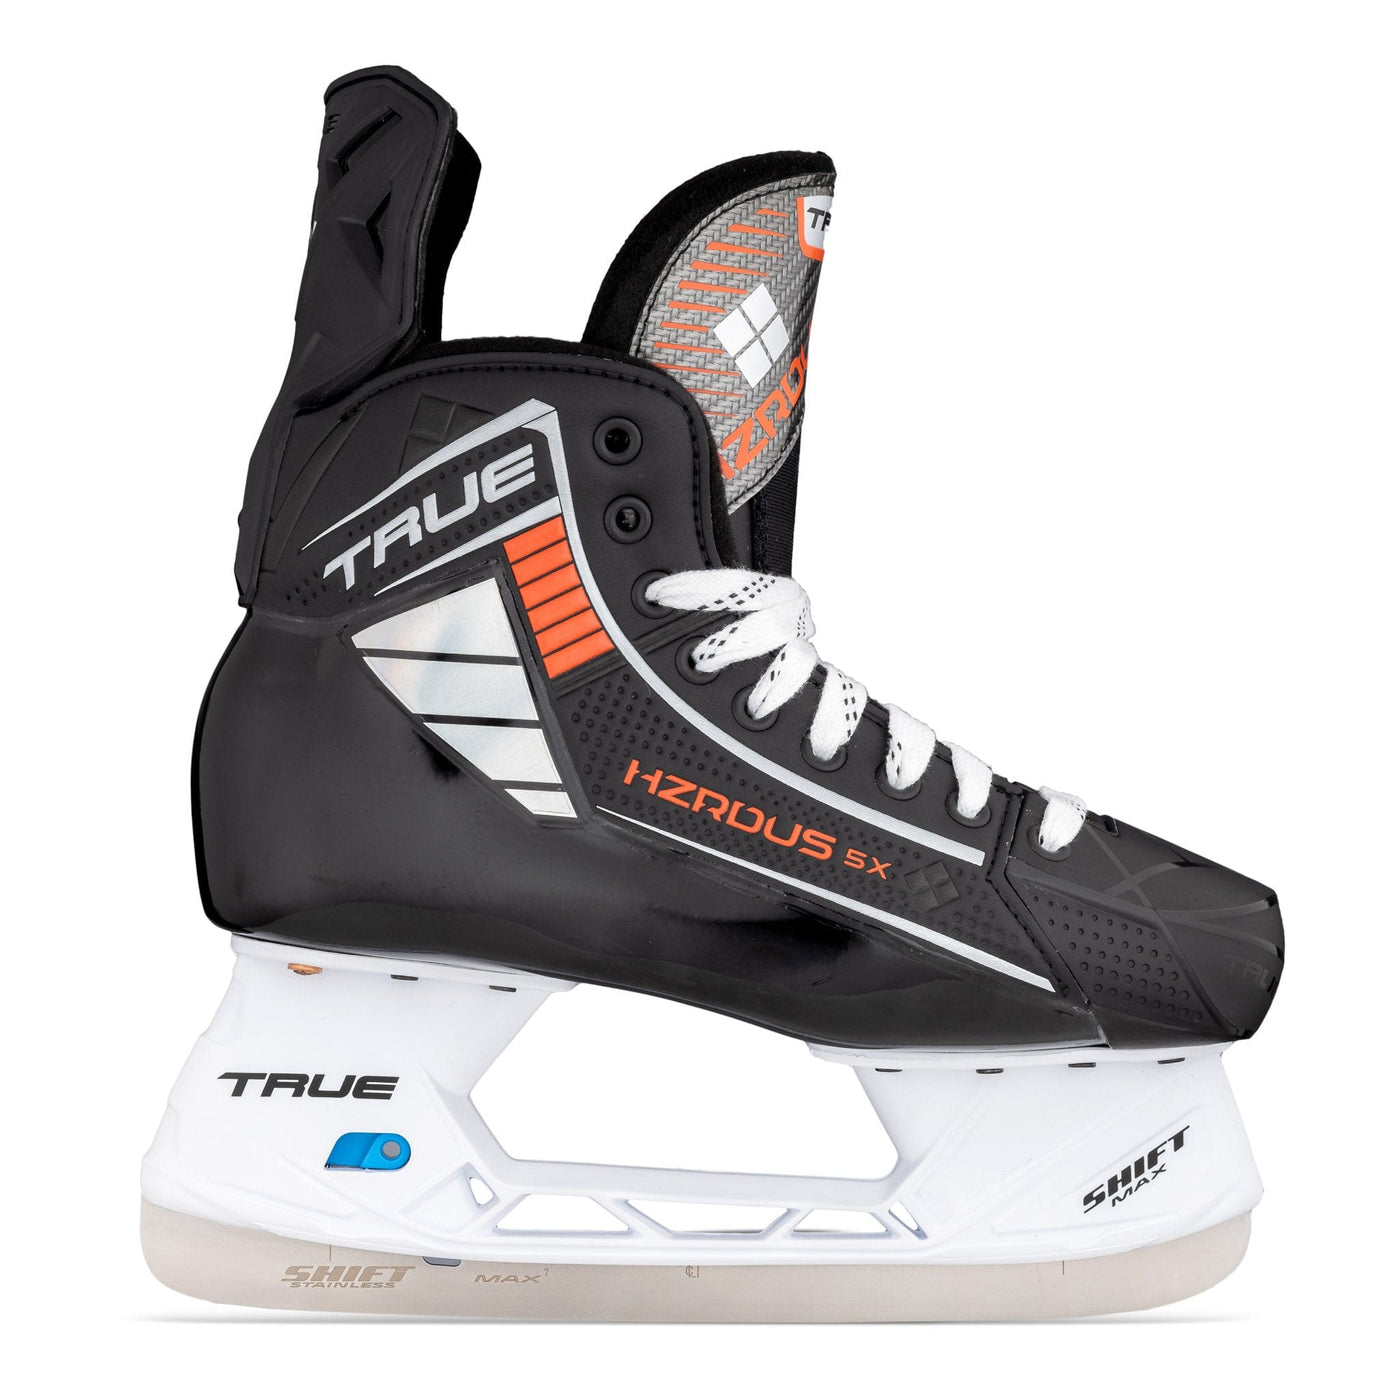 True HZRDUS 5X Senior Hockey Skates - TheHockeyShop.com